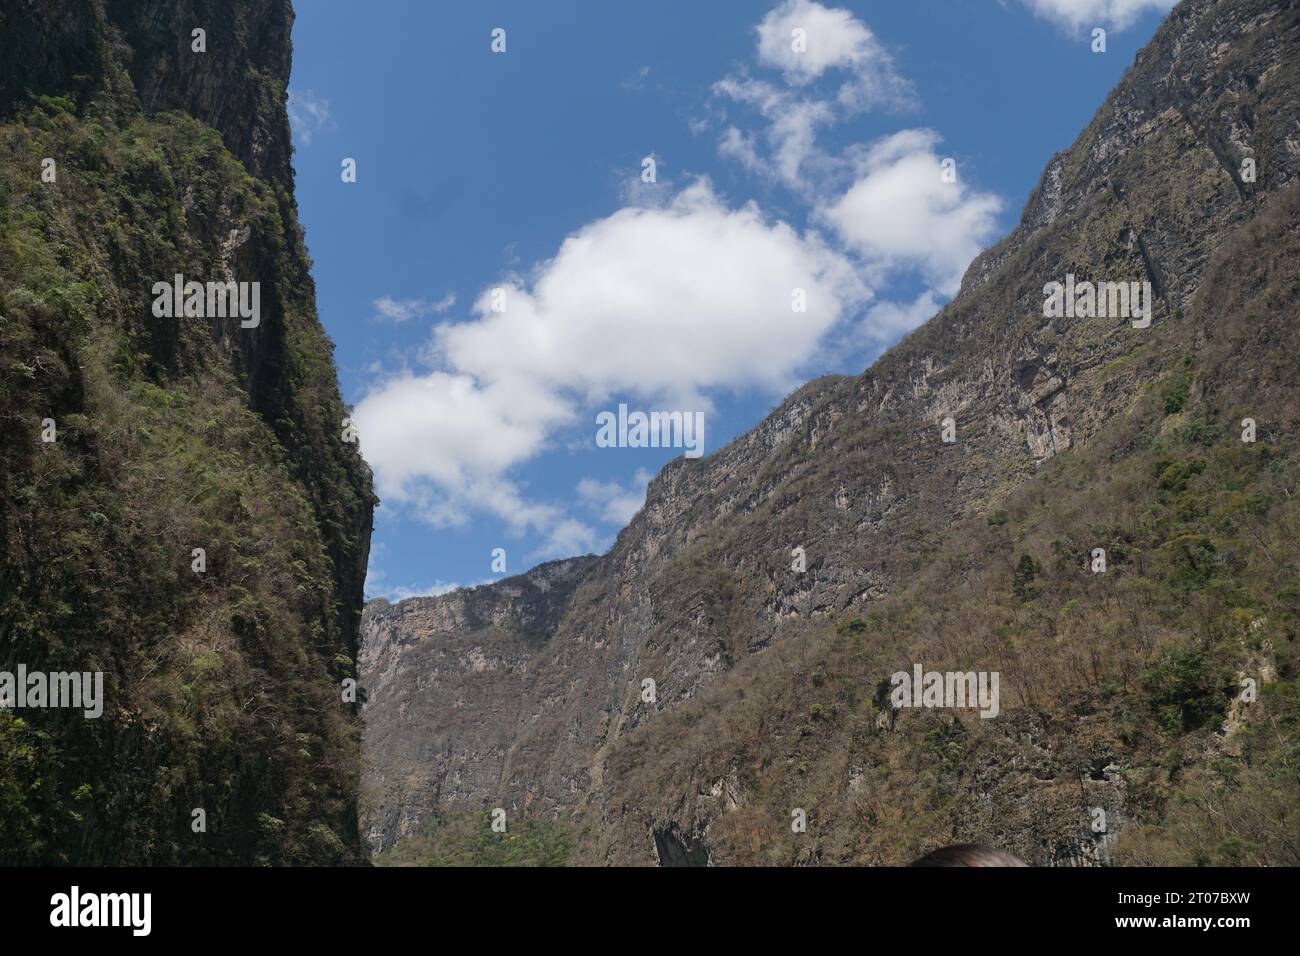 Sky, clouds, sumidero canyon, mountain, cliffs, vegetation at chiapas, mexico Stock Photo